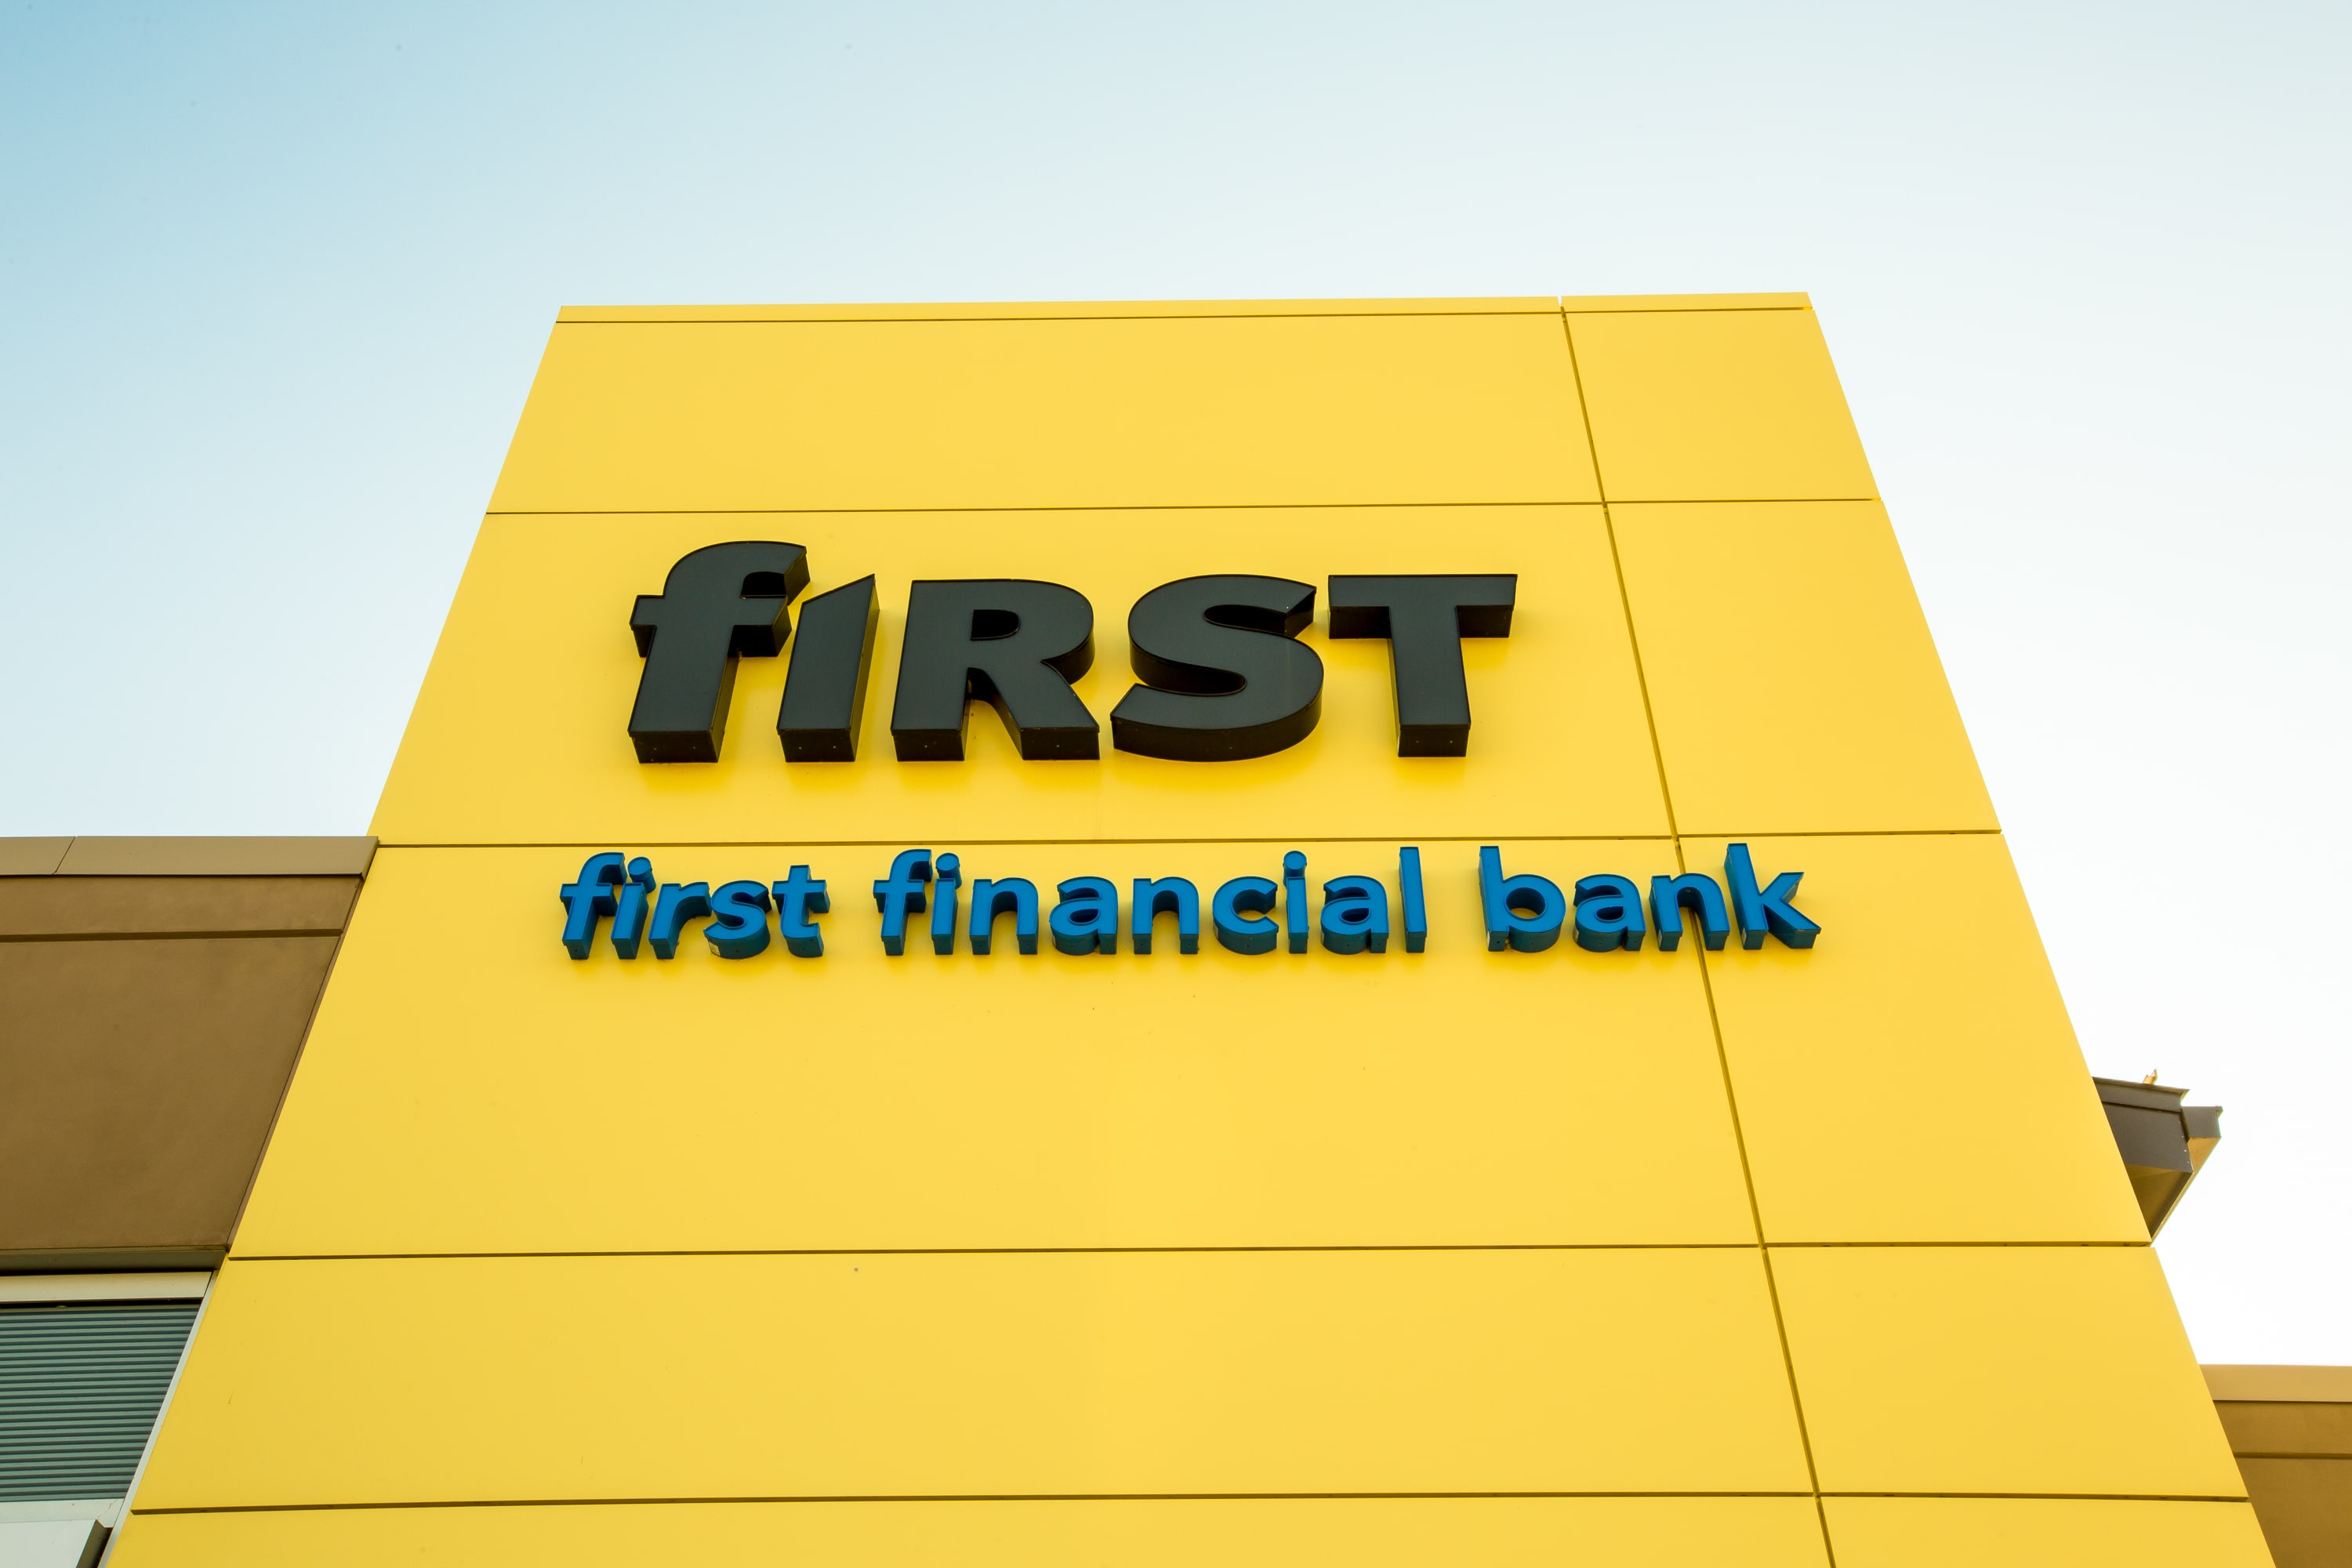 First Financial Bank & ATM Dayton (937)535-3400